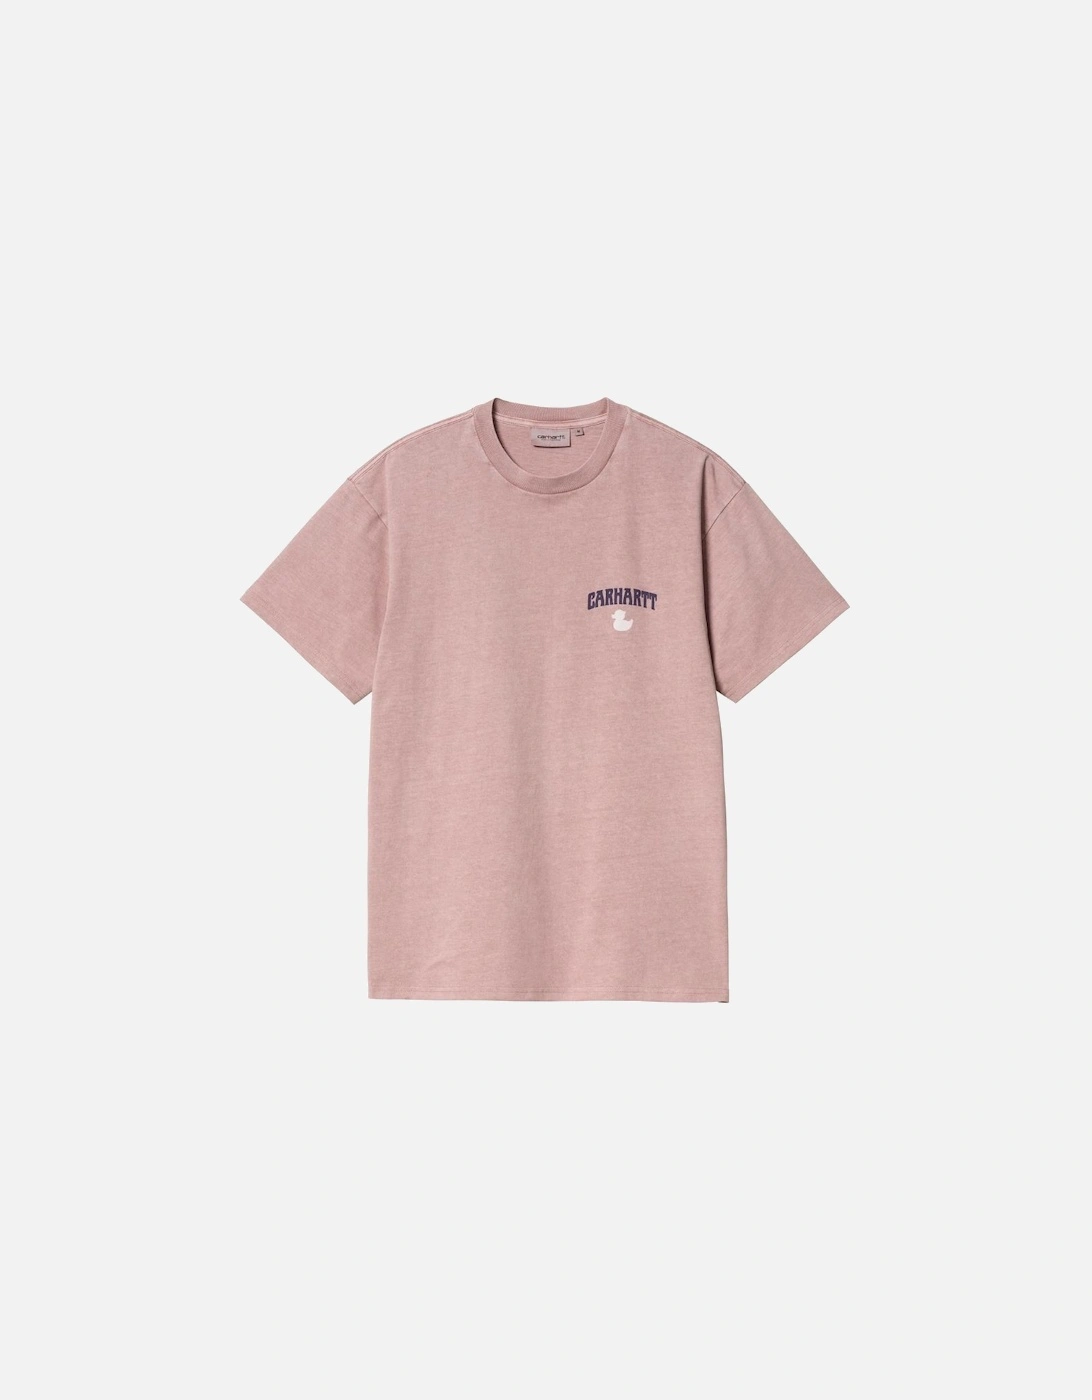 S/S Duckin' T-Shirt - Glassy Pink, 3 of 2